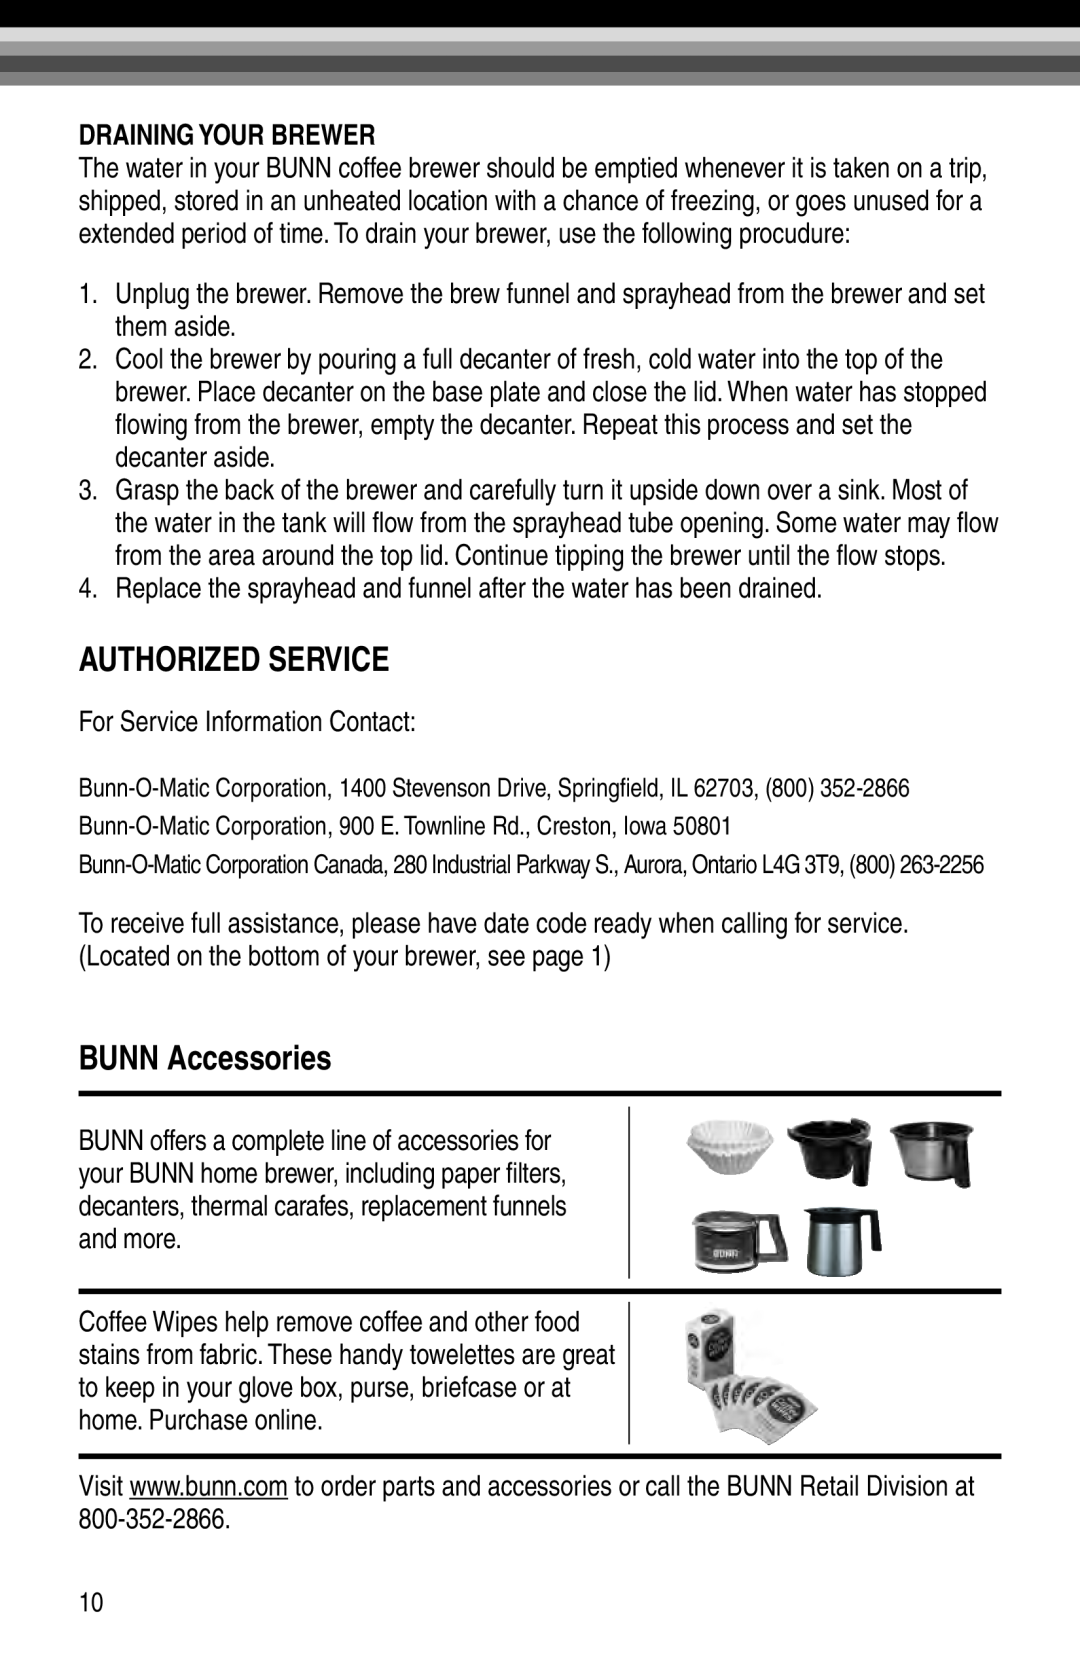 Bunn STX, NHBX-W, NHBX-B manual Authorized Service, BUNN Accessories, Draining Your Brewer 